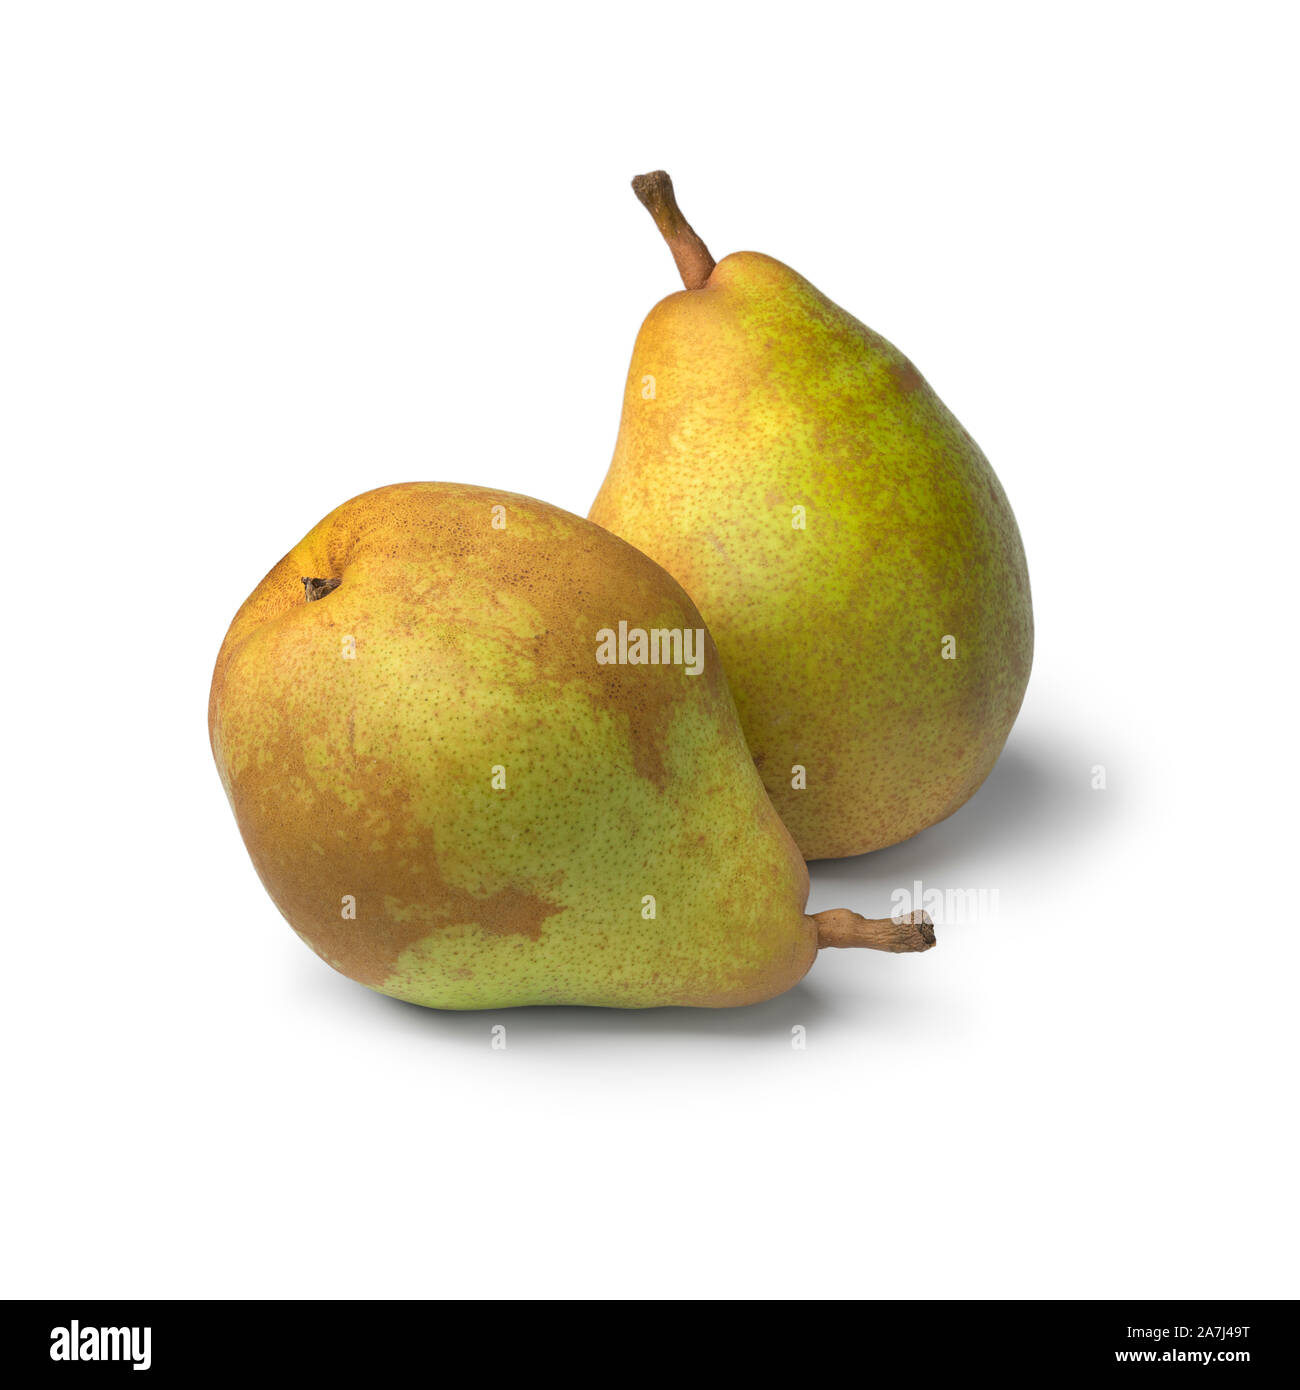 Pair of fresh ripe Doyenne du Comice pears isolated on white background Stock Photo